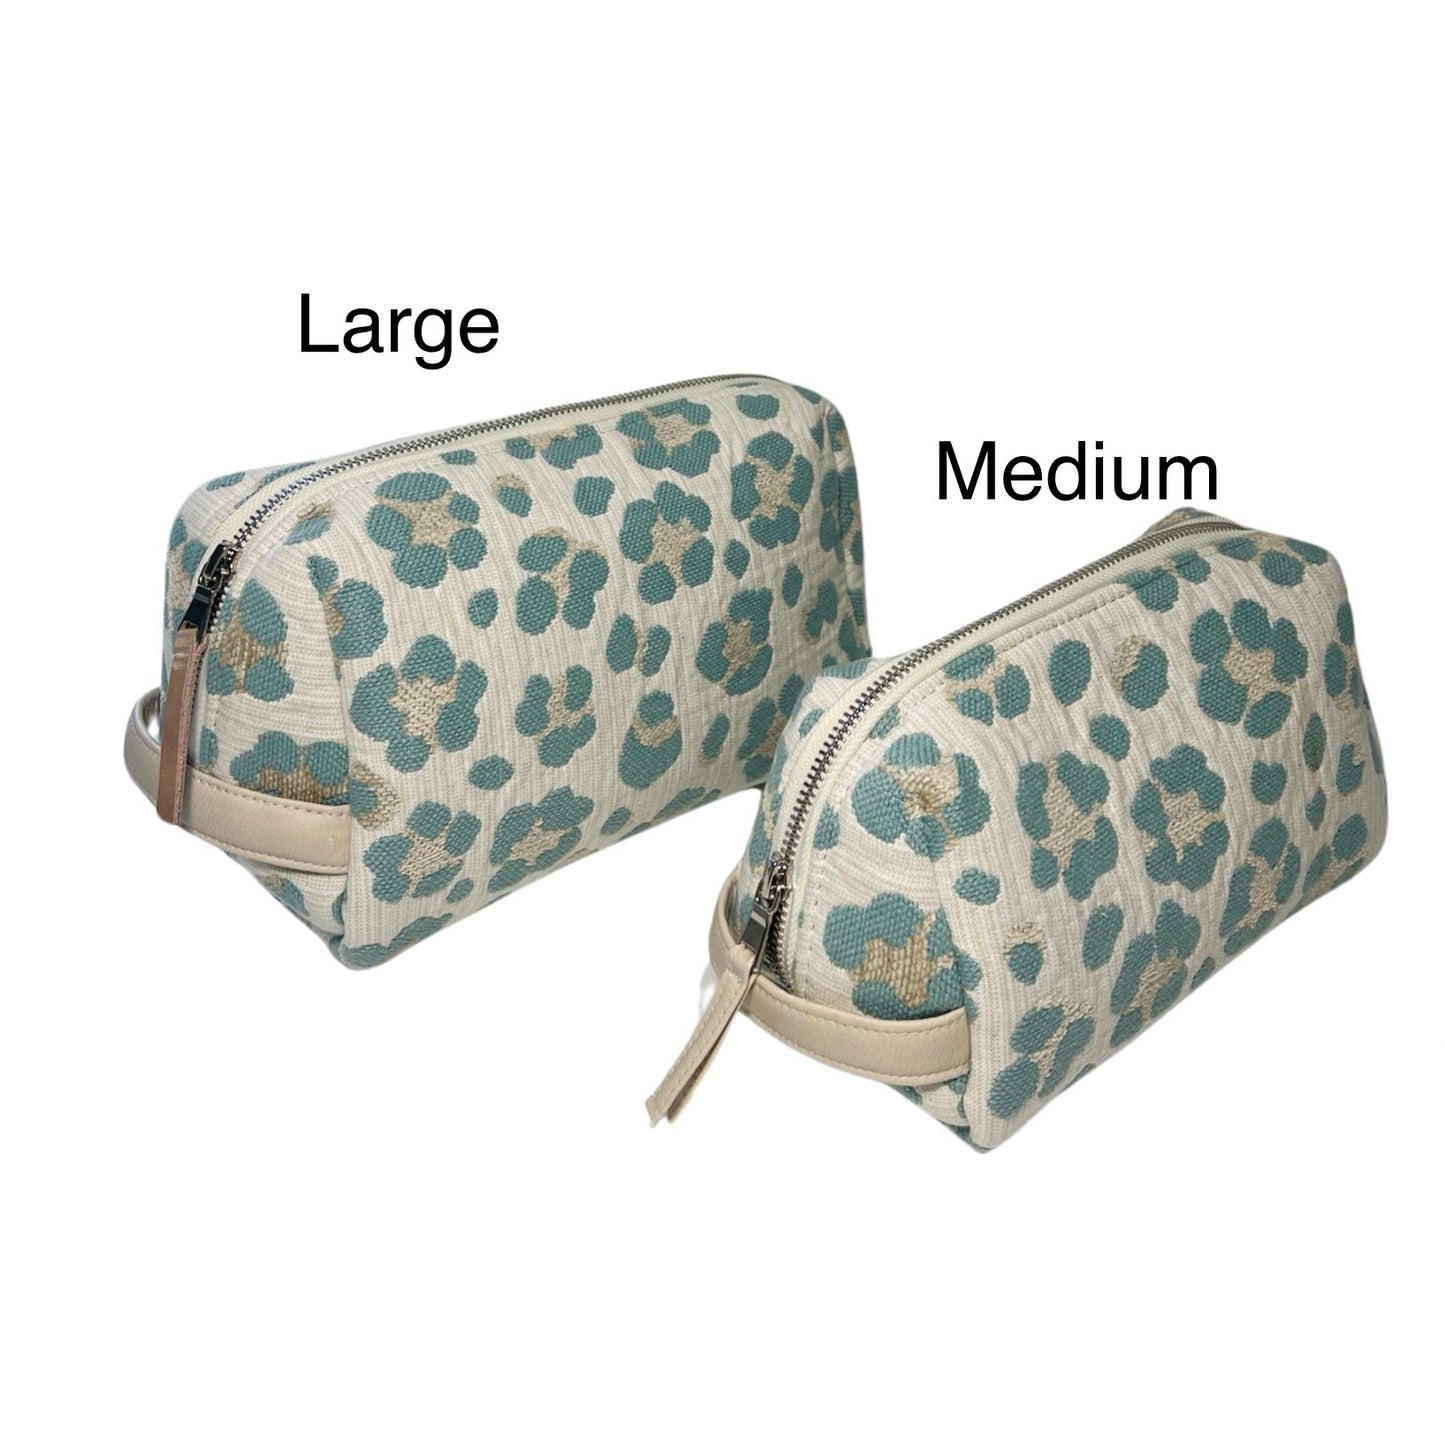 Trixie Leopard Toiletry Bag in Aqua